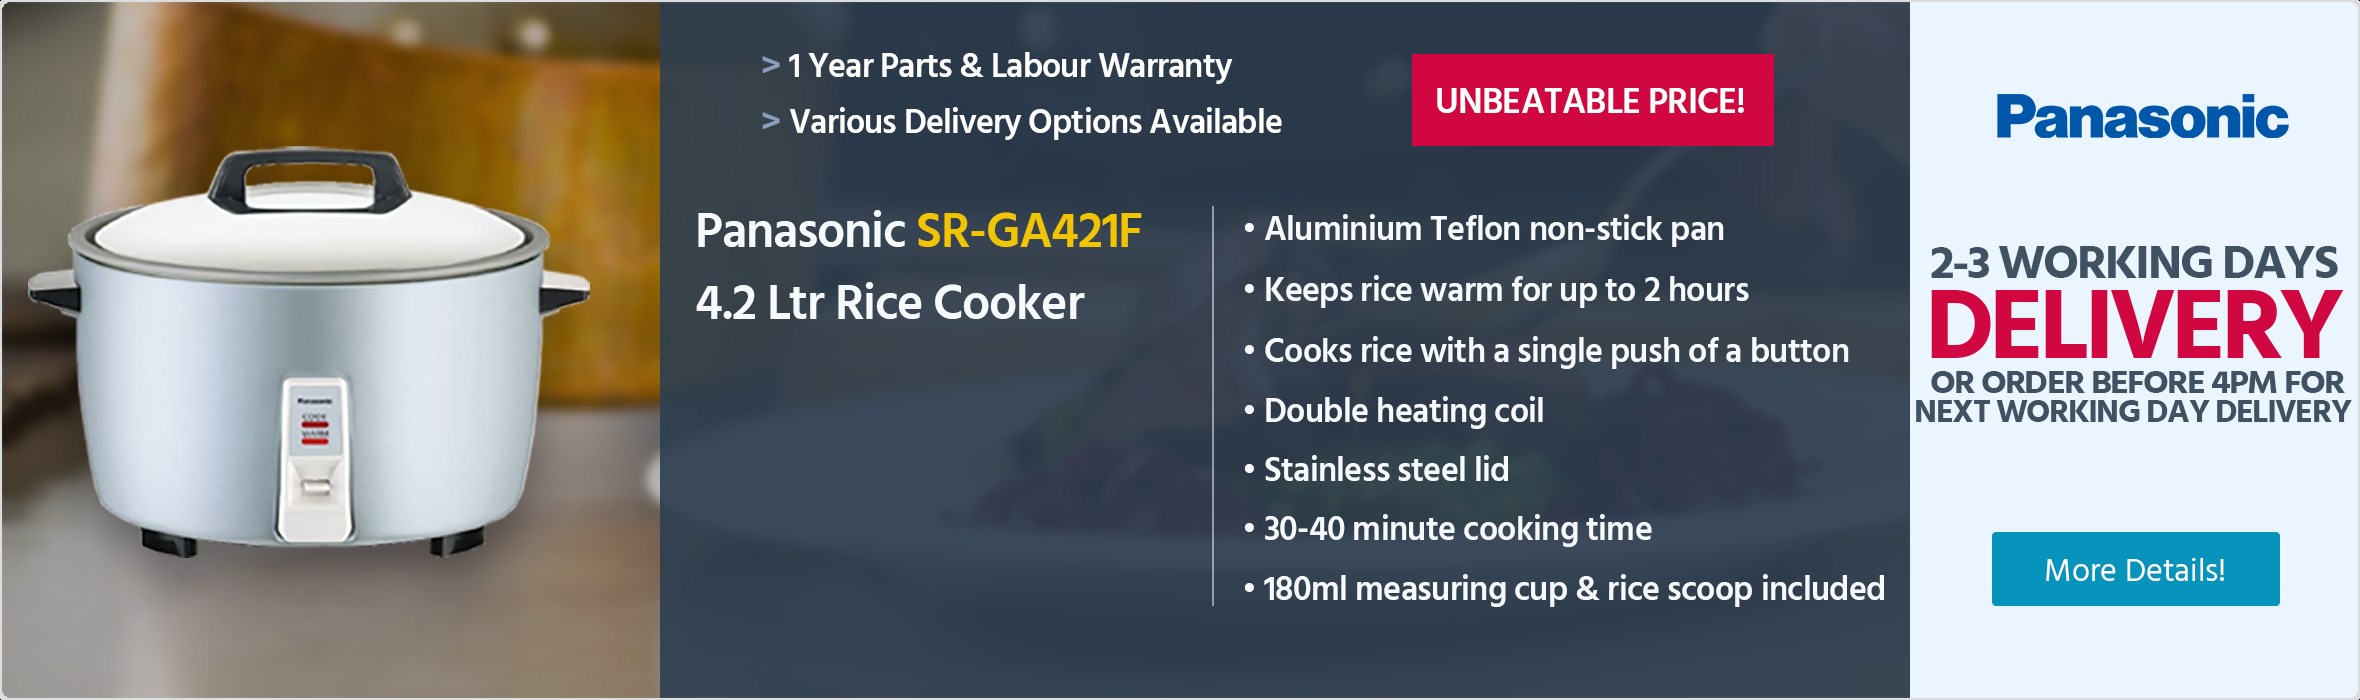 Panasonic SR-GA421F 4.2 Ltr Rice Cooker